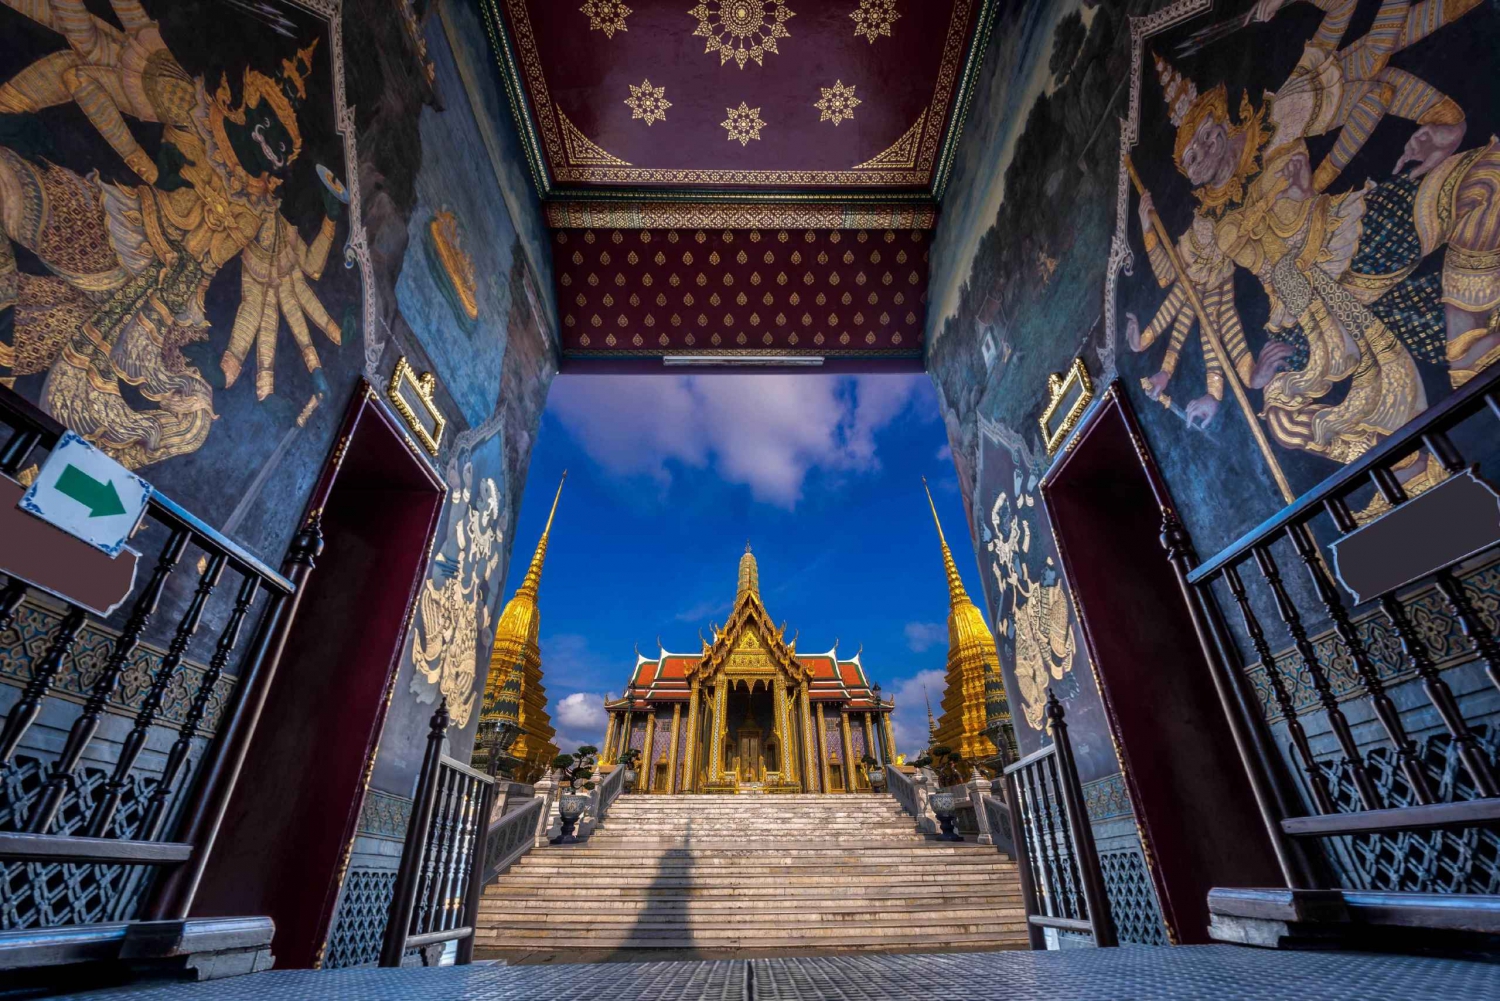 Bangkok: Evening Tour with Wat Arun, Wat Pho & Tuk Tuk Ride